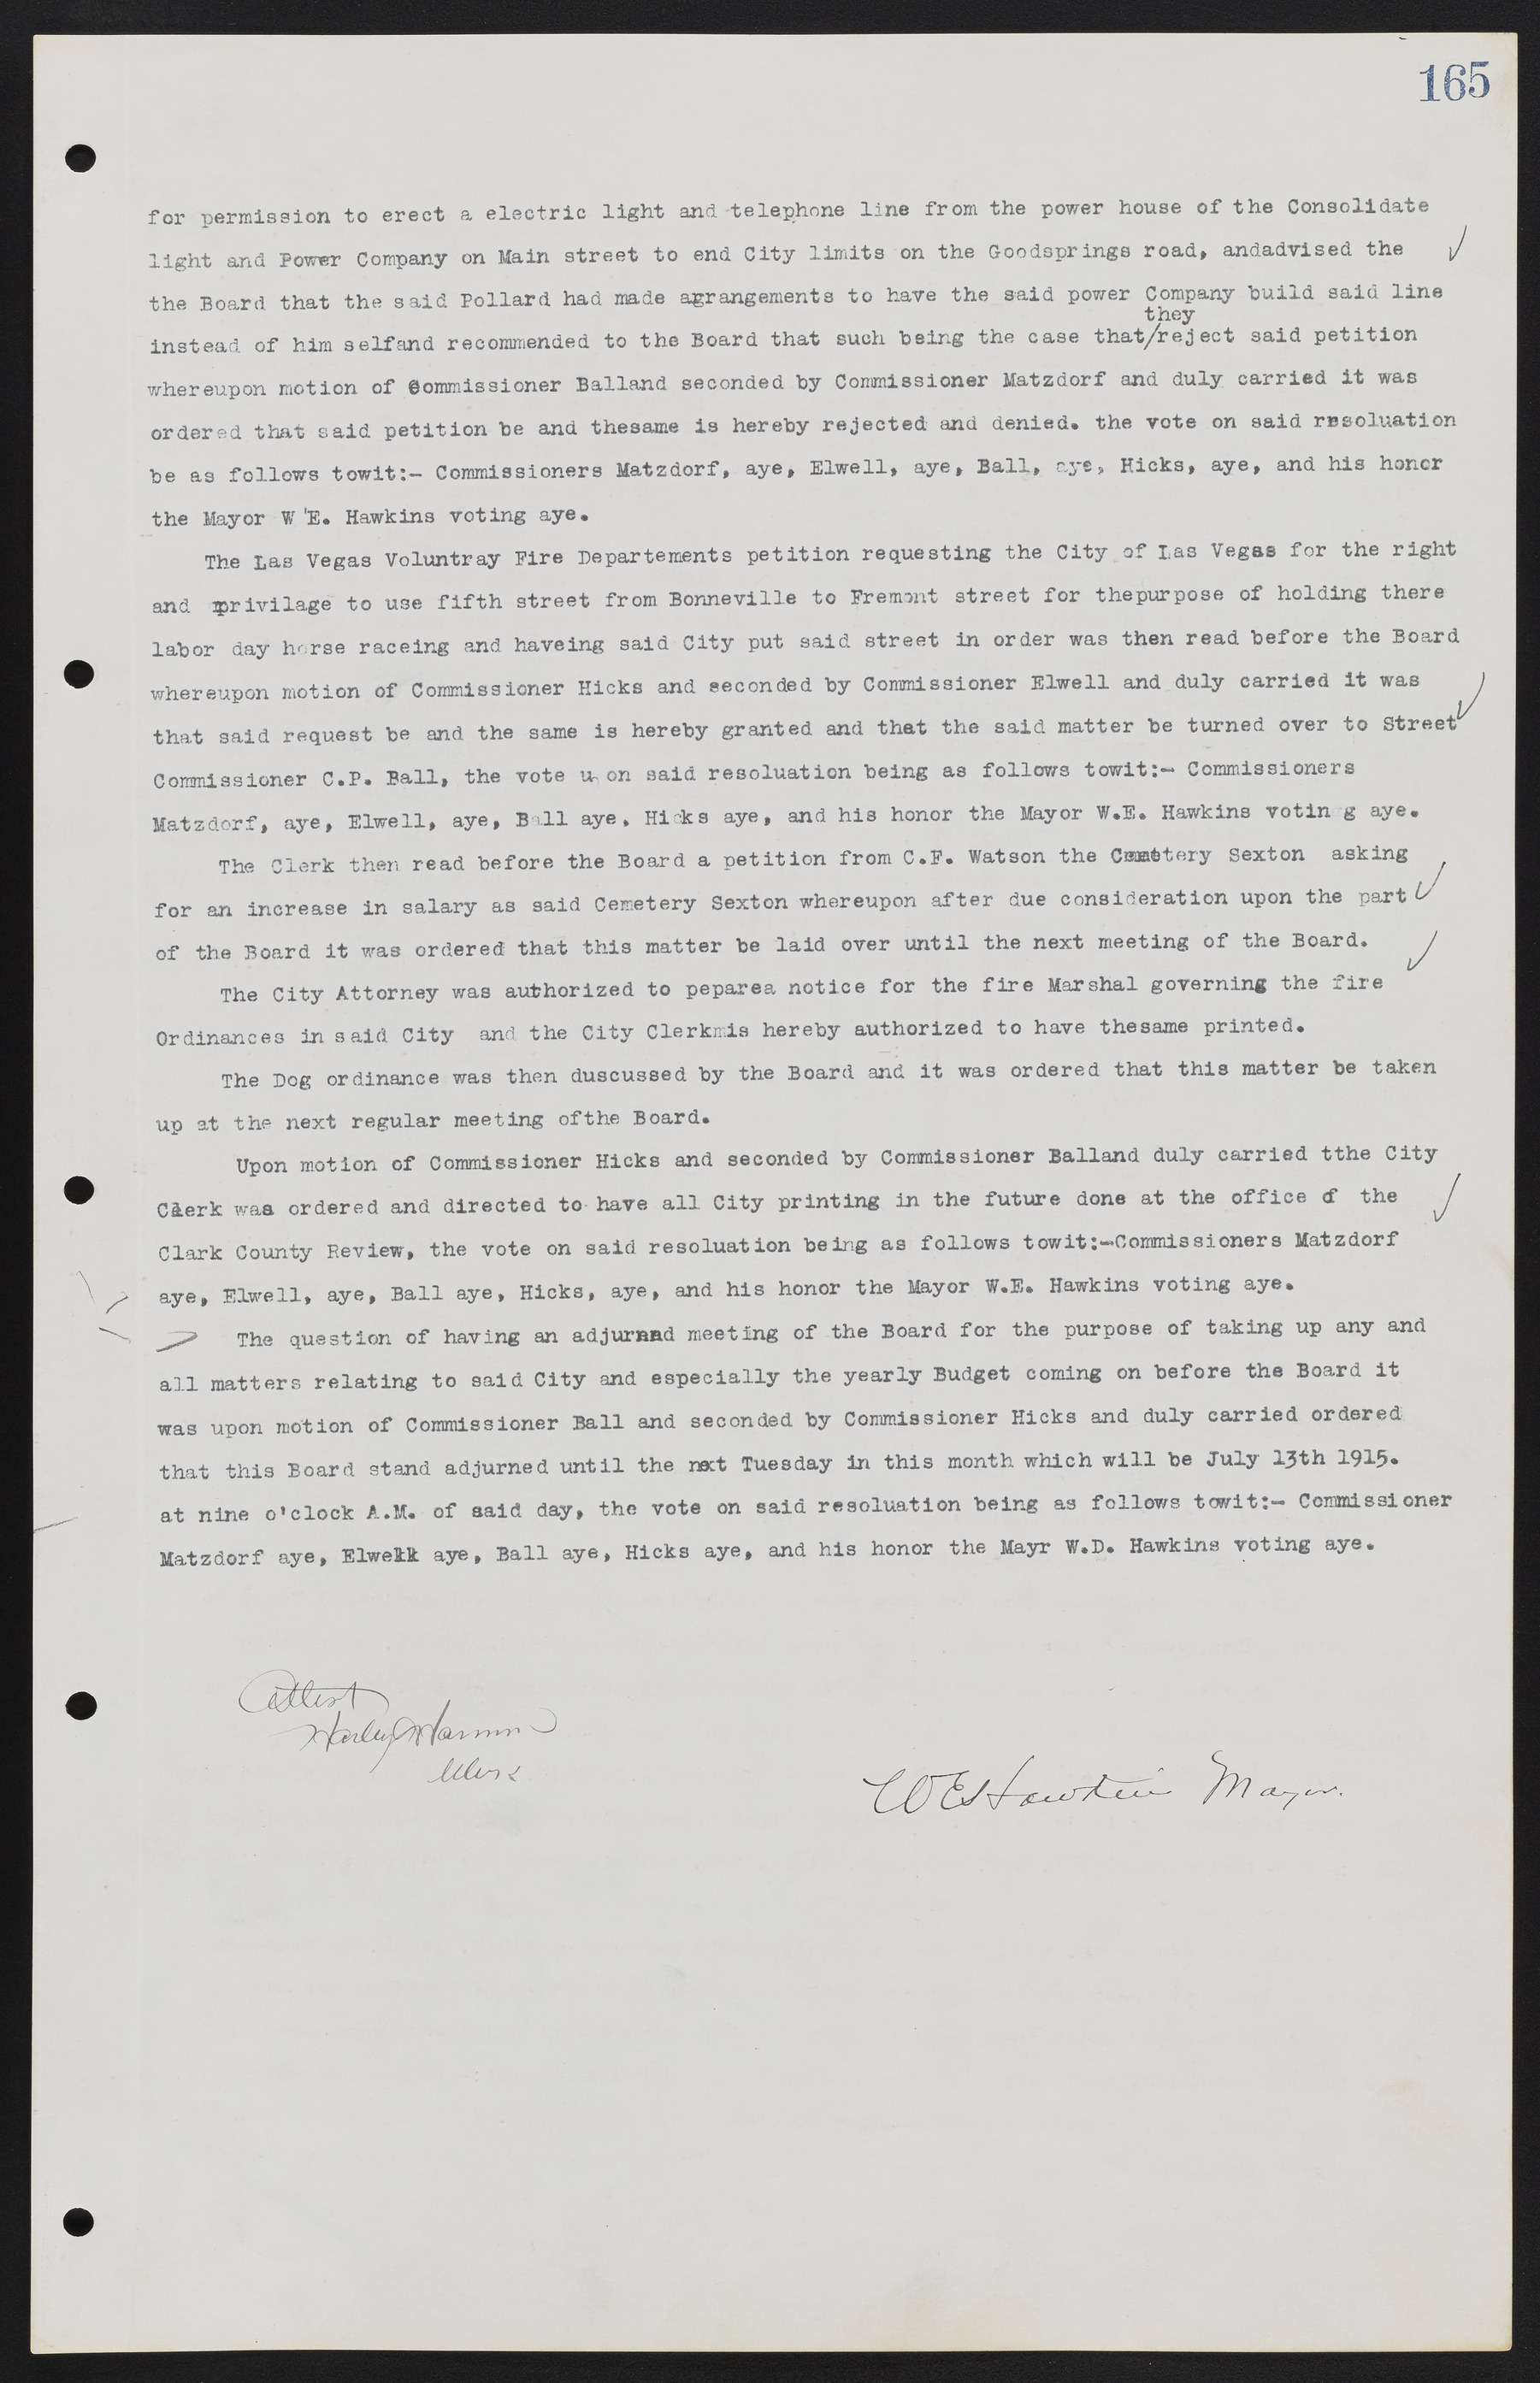 Las Vegas City Commission Minutes, June 22, 1911 to February 7, 1922, lvc000001-181